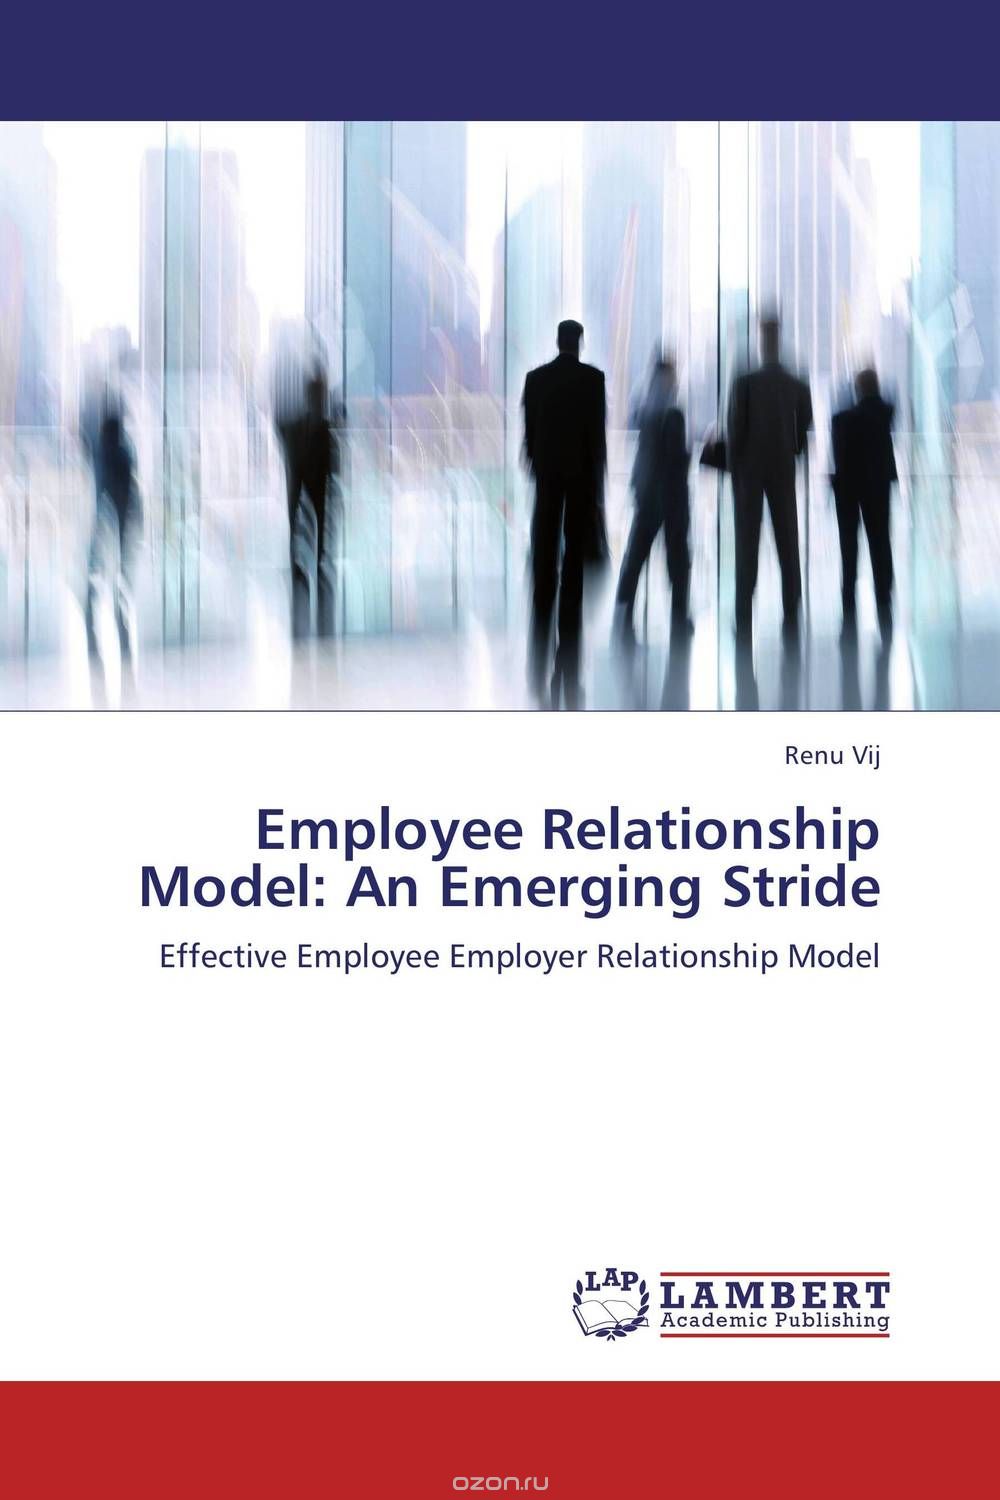 Скачать книгу "Employee Relationship Model: An Emerging Stride"